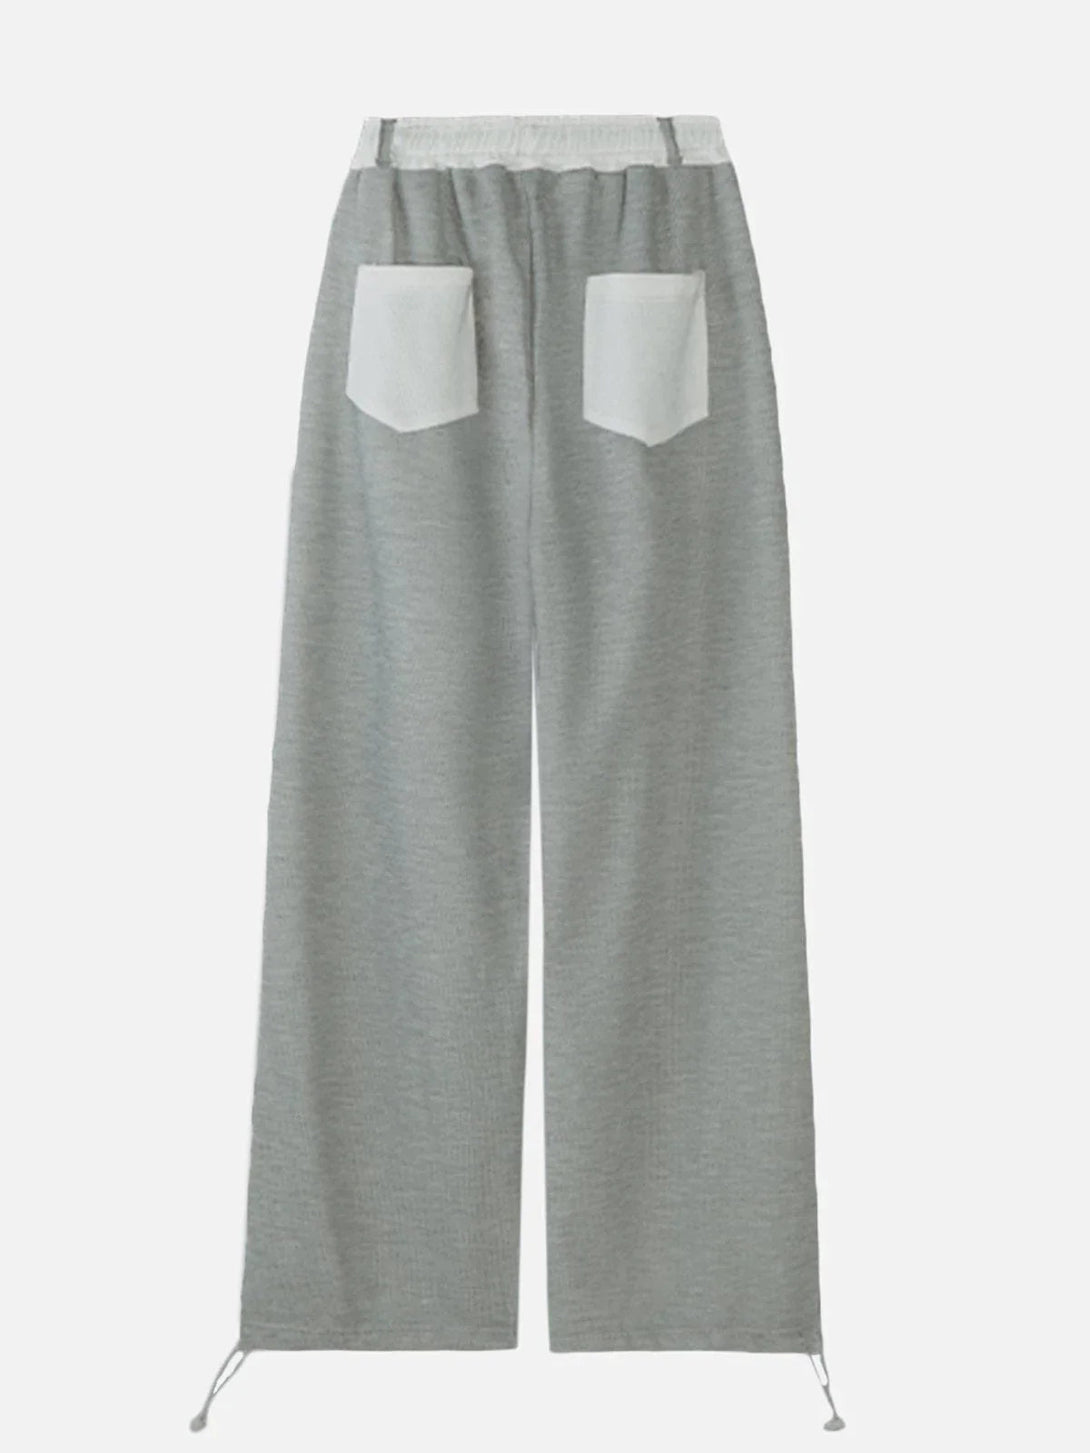 Majesda® - Colorblock Drawstring Pants outfit ideas streetwear fashion